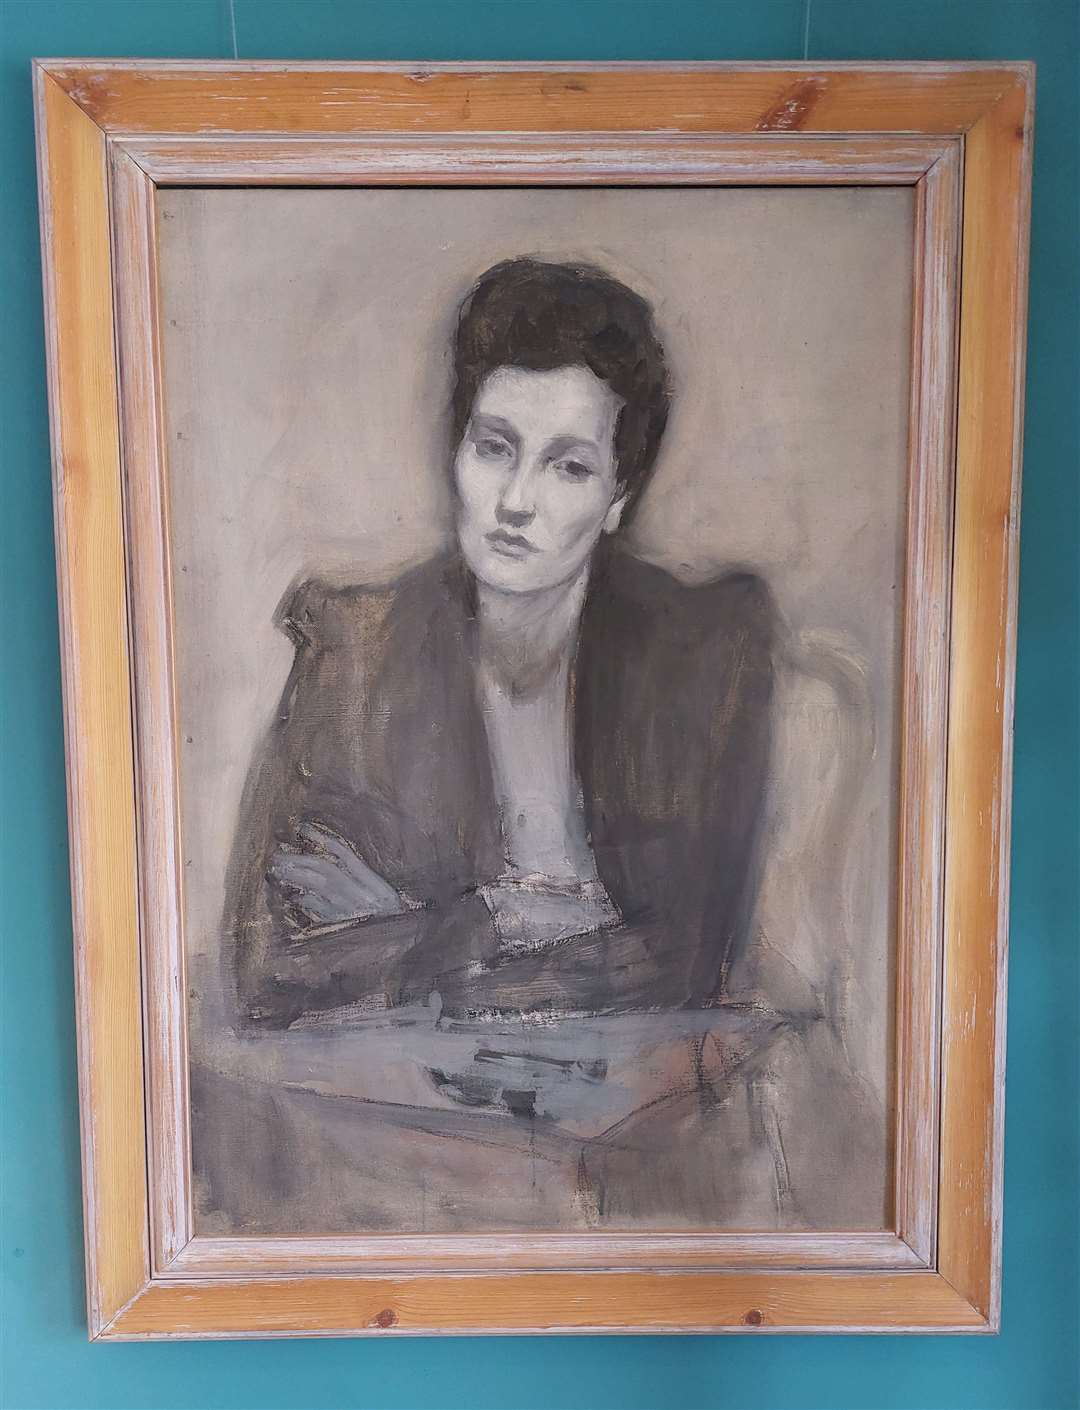 Webb's portrait of Asha Gascoigne in her 20s